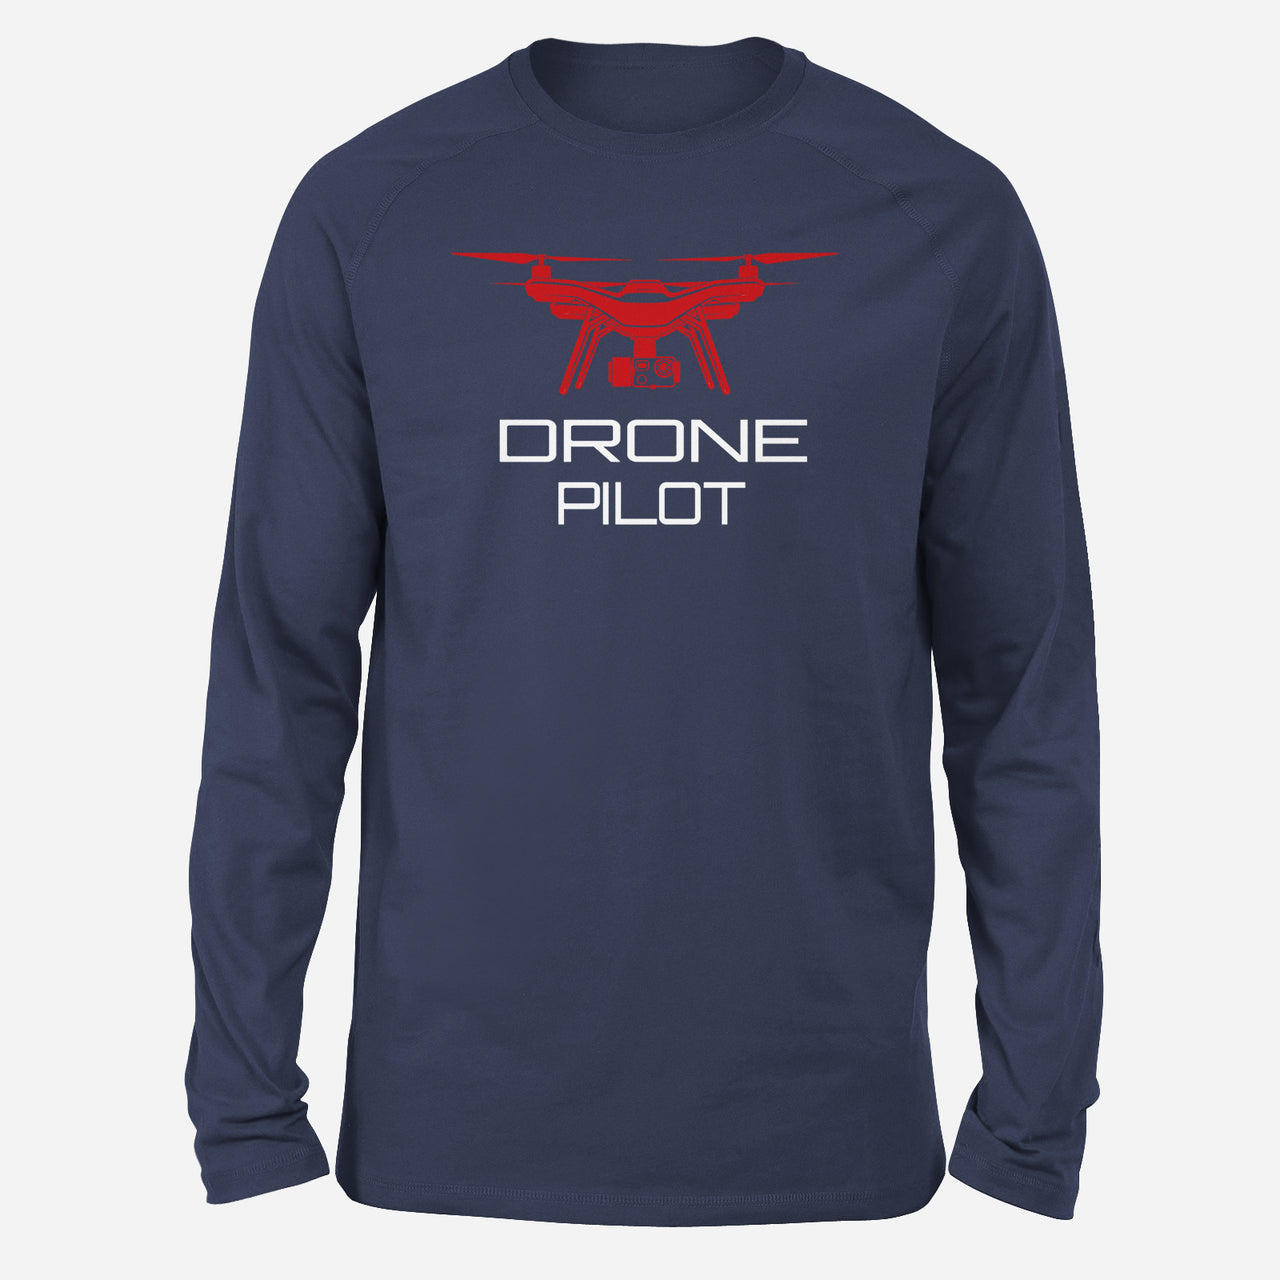 Drone Pilot Designed Long-Sleeve T-Shirts